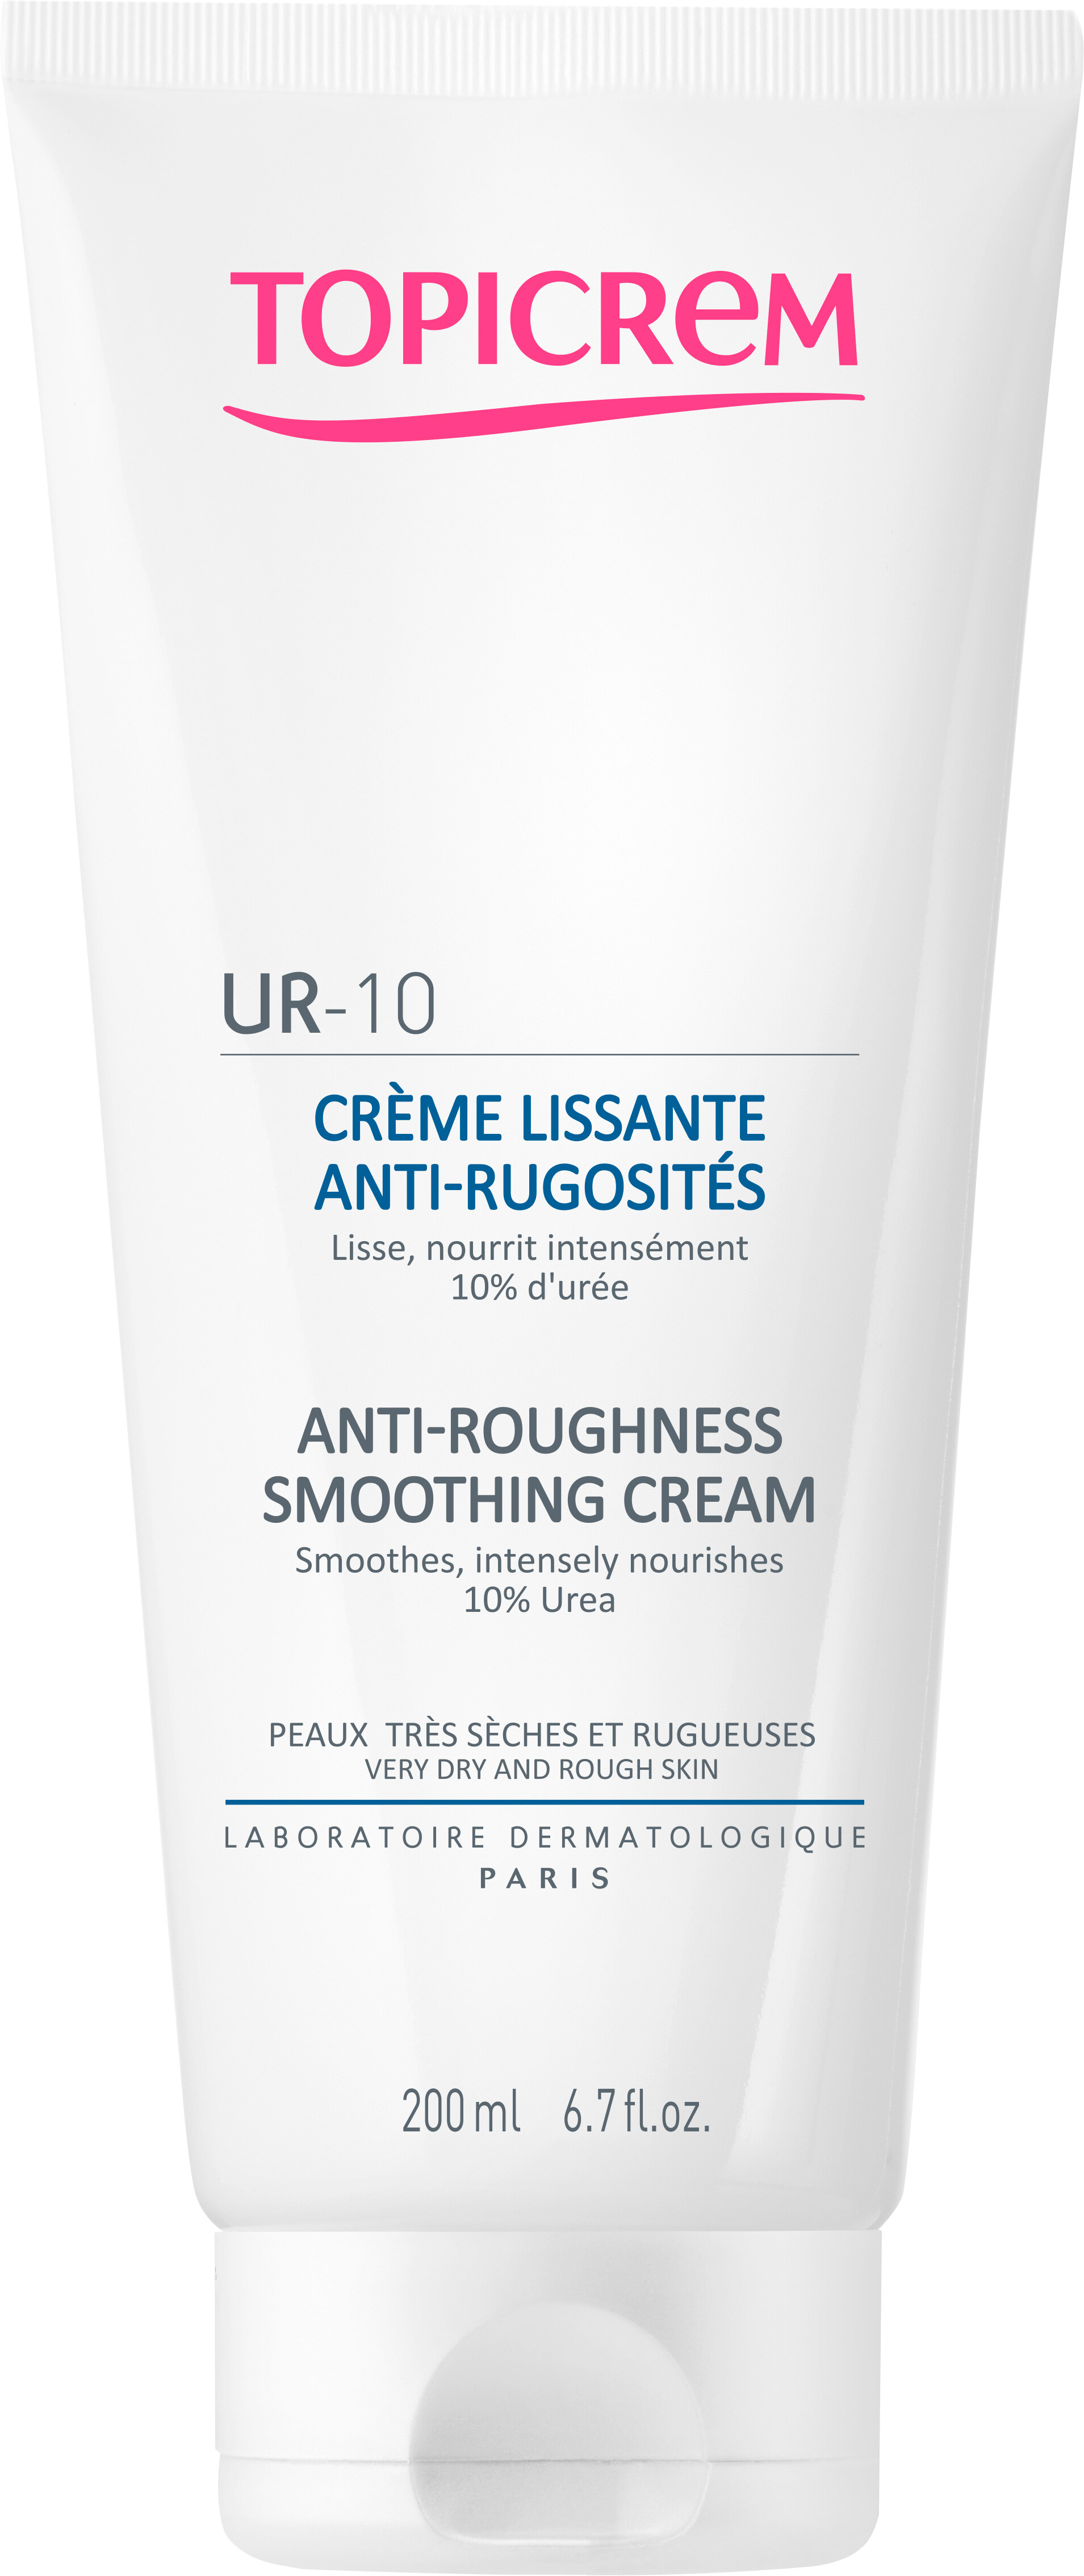 Topicrem UR-10 Anti-Roughness Smoothing Cream 200ml